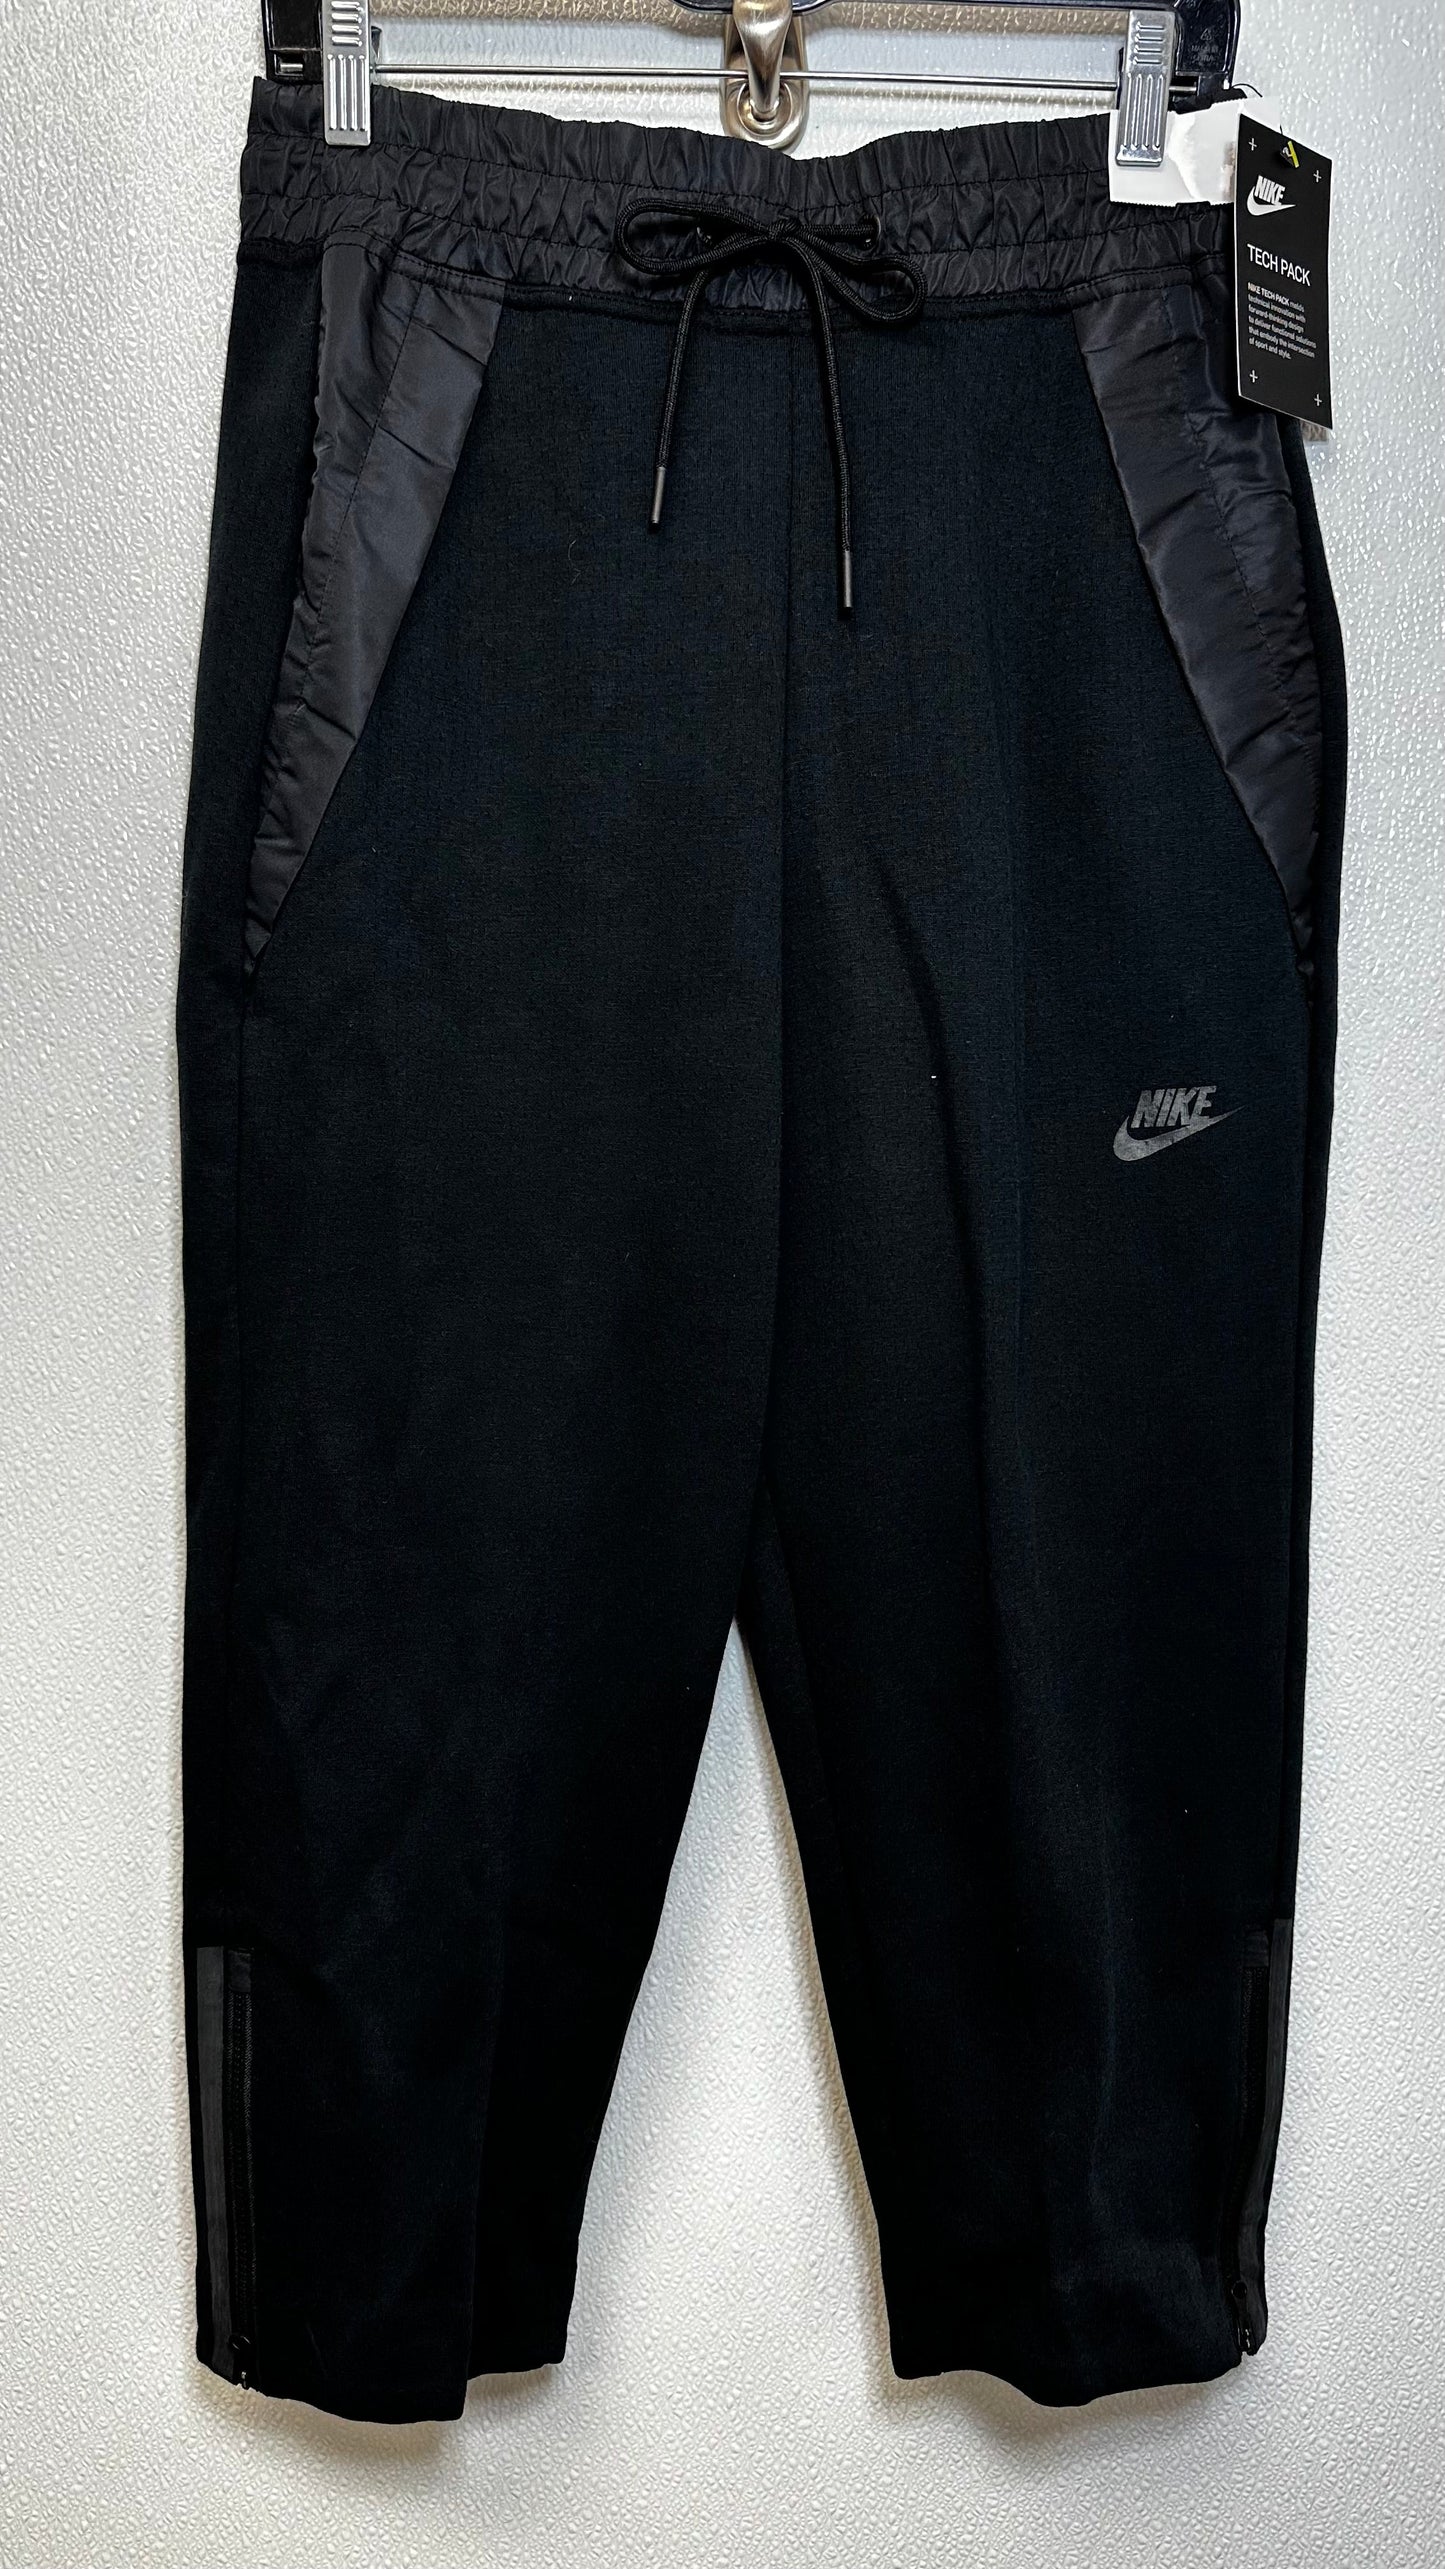 Black Athletic Pants Nike Apparel, Size S